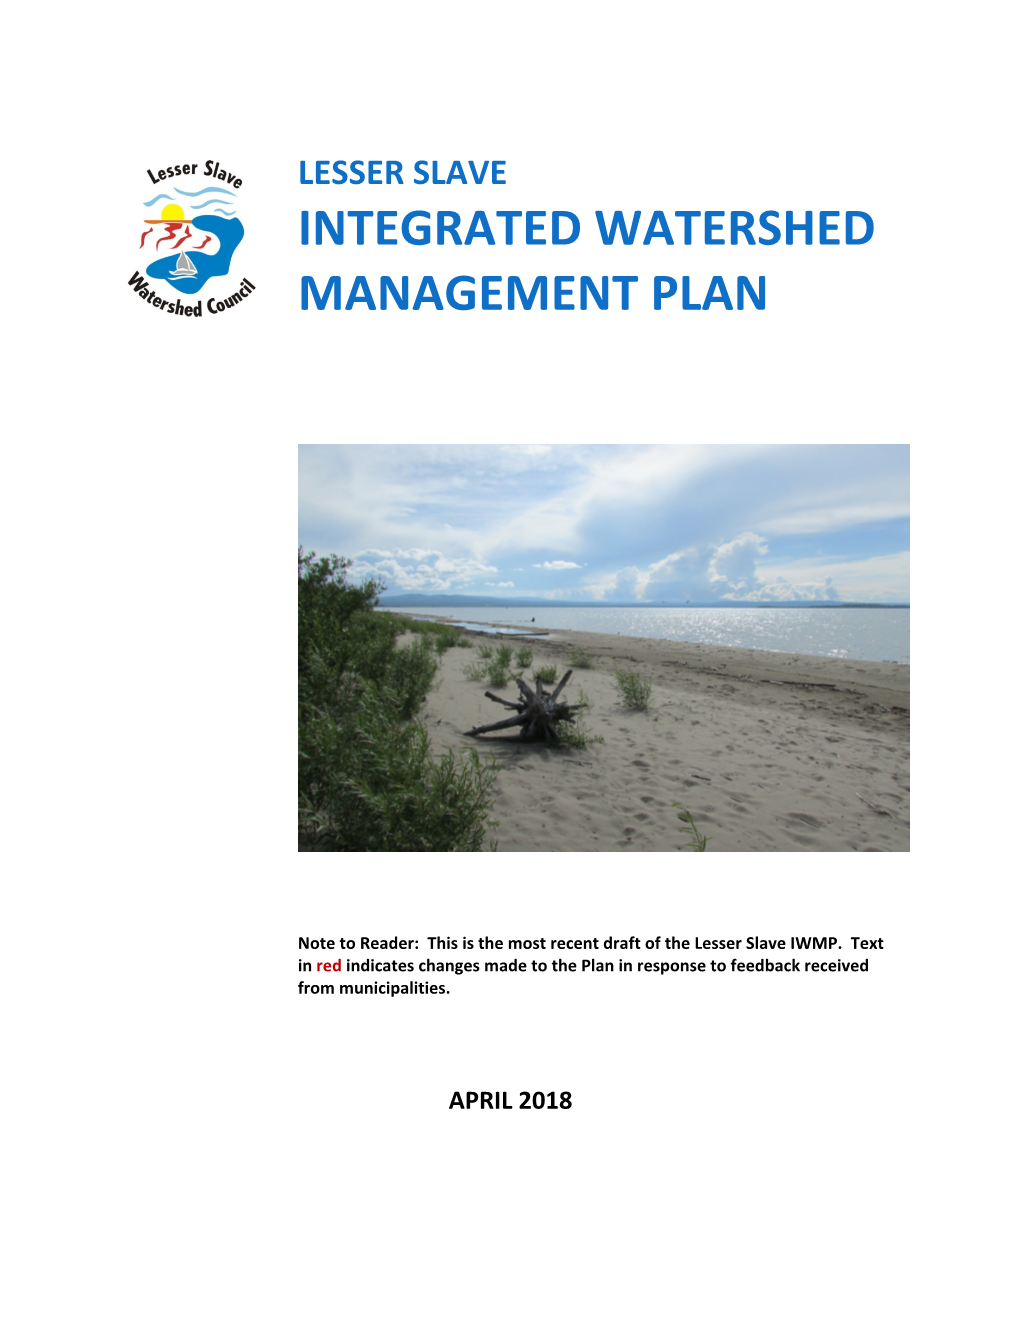 Lesser Slave Integrated Watershed Management Plan